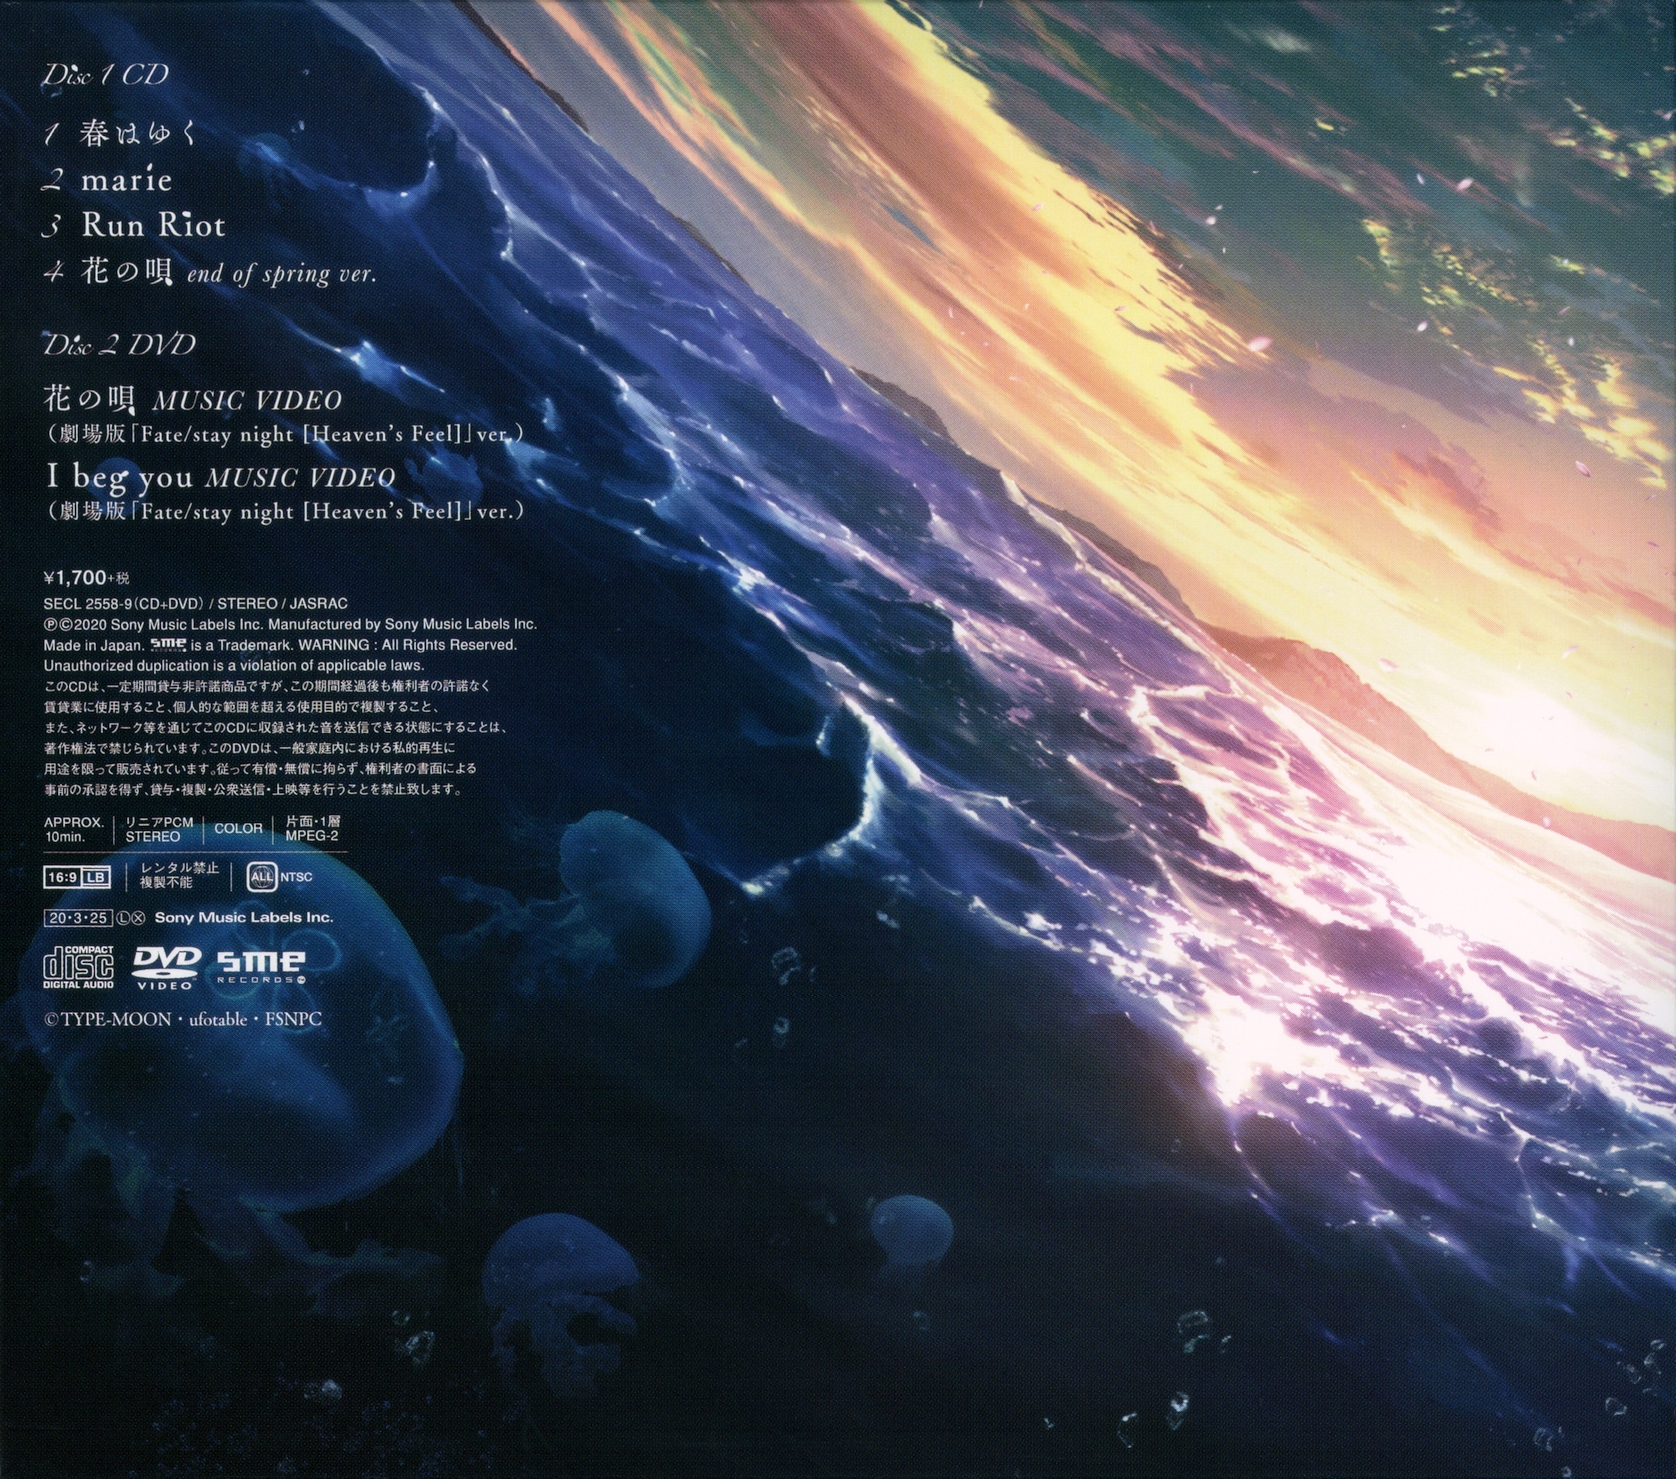 Release “春はゆく / marie” by Aimer - Cover art - MusicBrainz